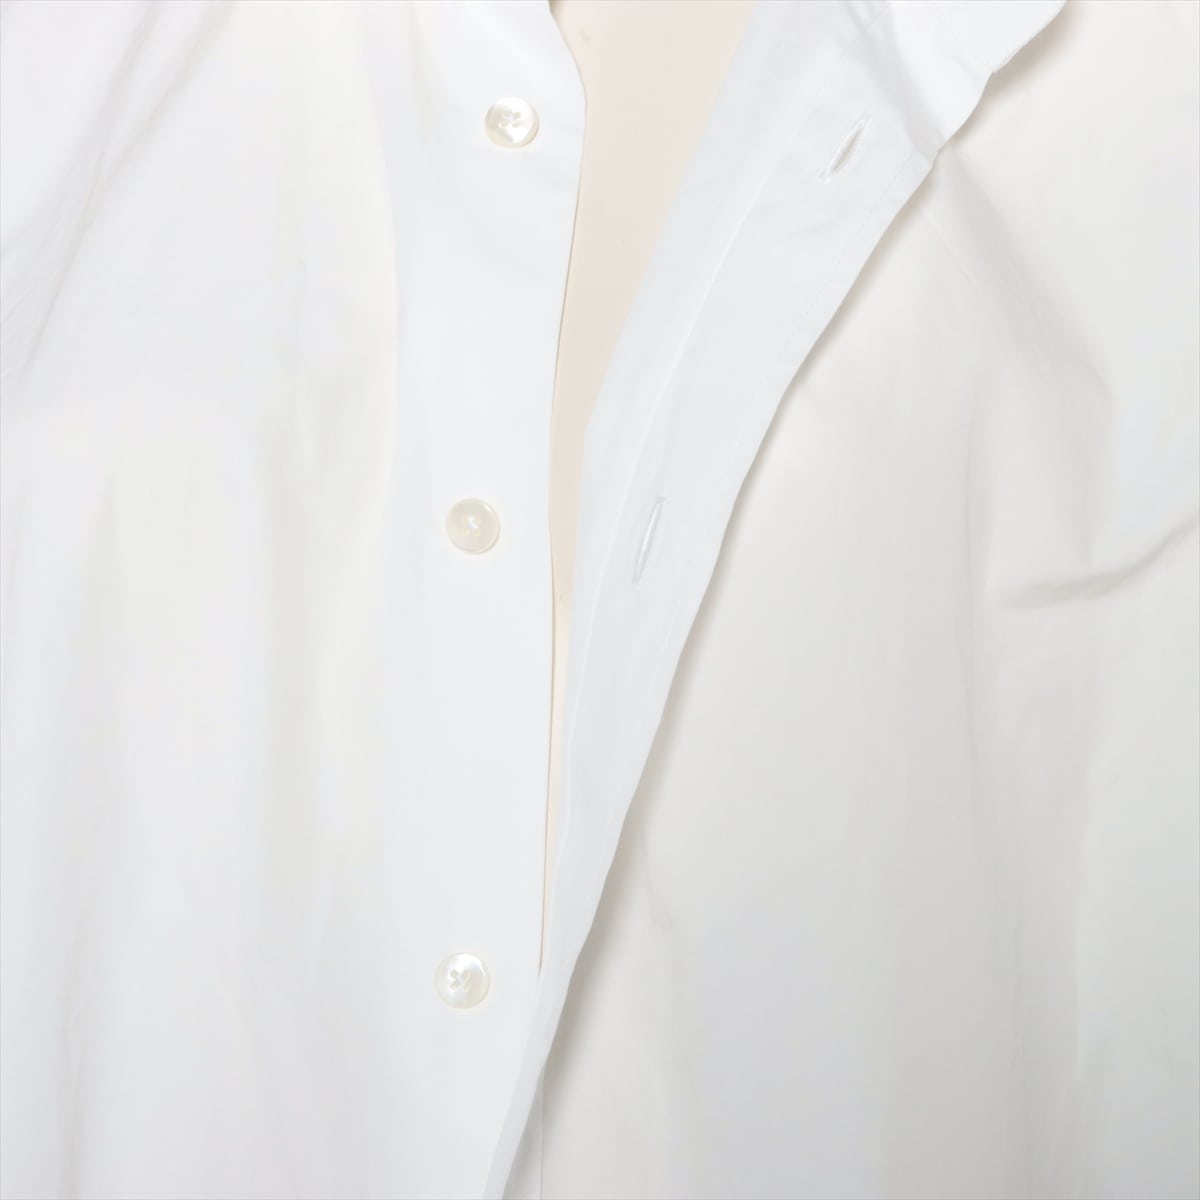 Maison Margiela 20AW Cotton Shirt dress 36 Ladies' White  4 S51CU0216